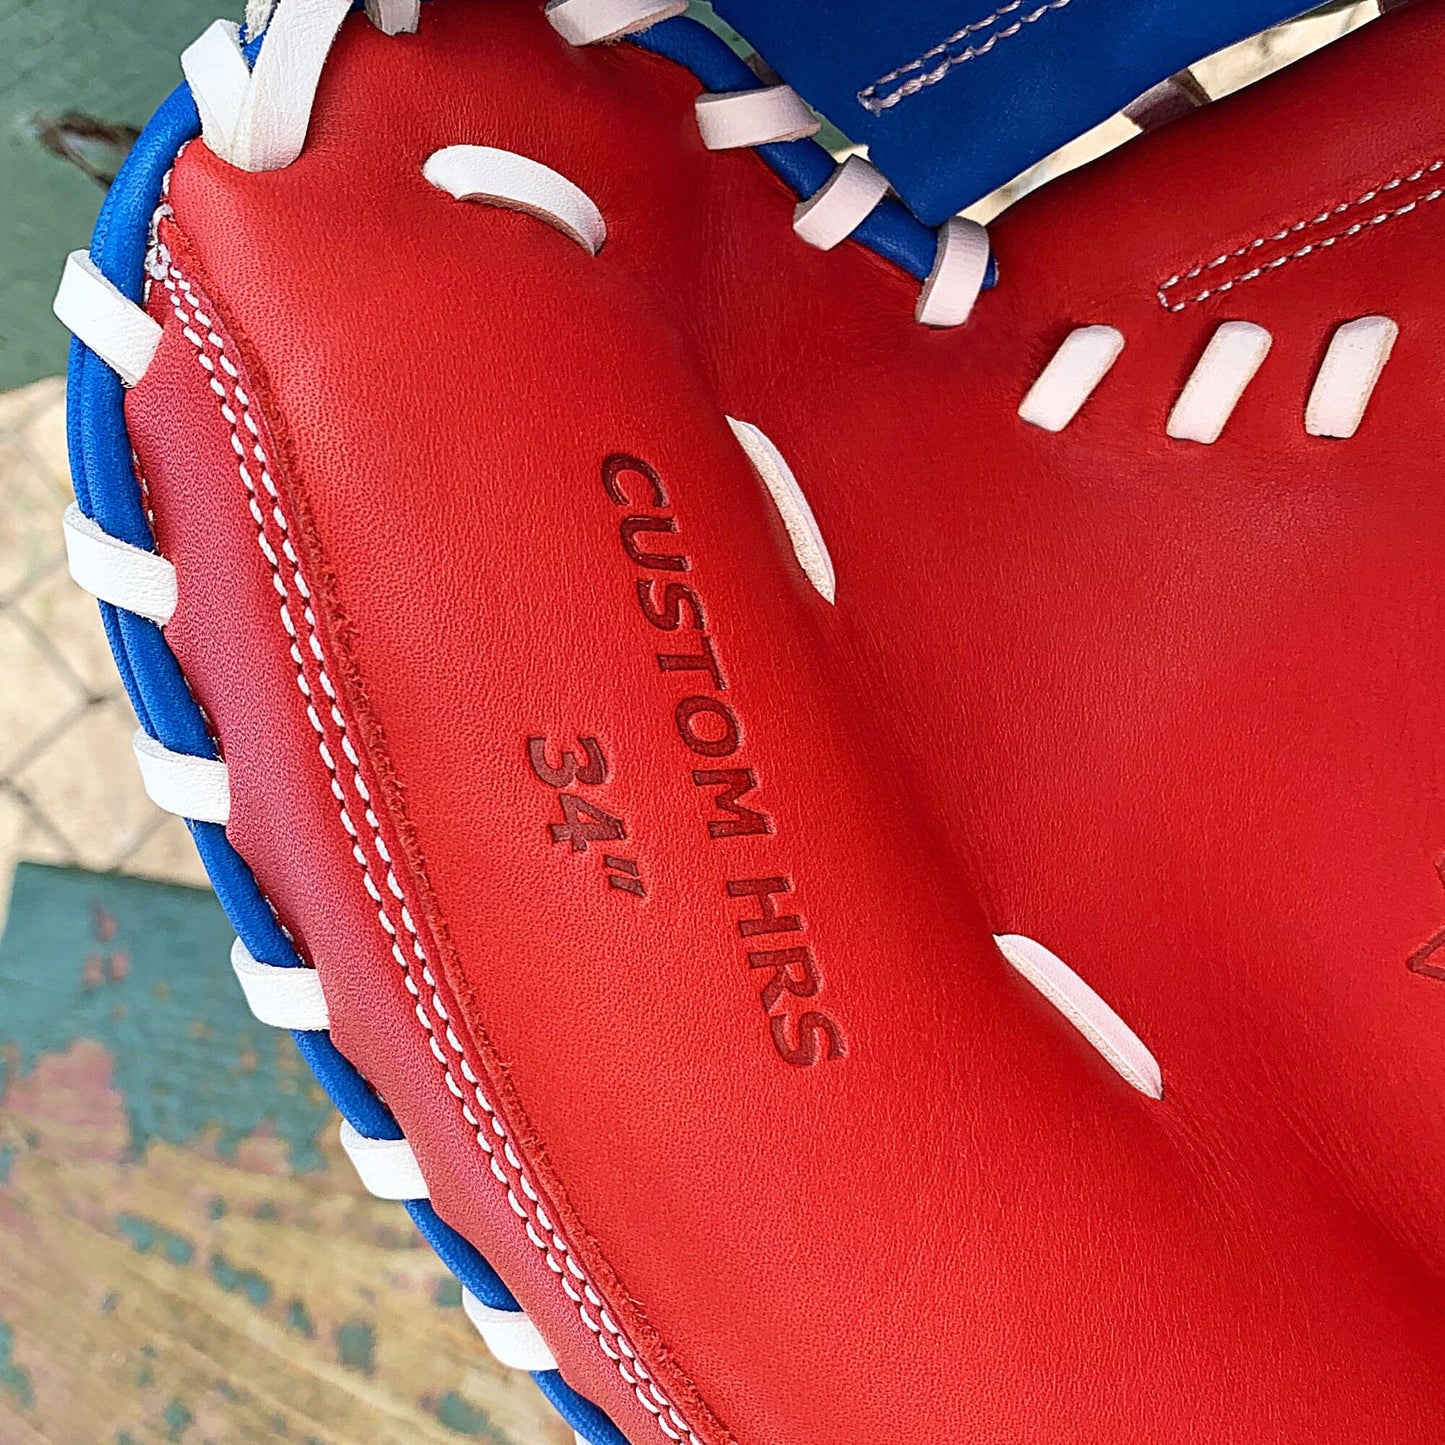 34" - Baseball Catcher's Mitt - Red, White, and Blue